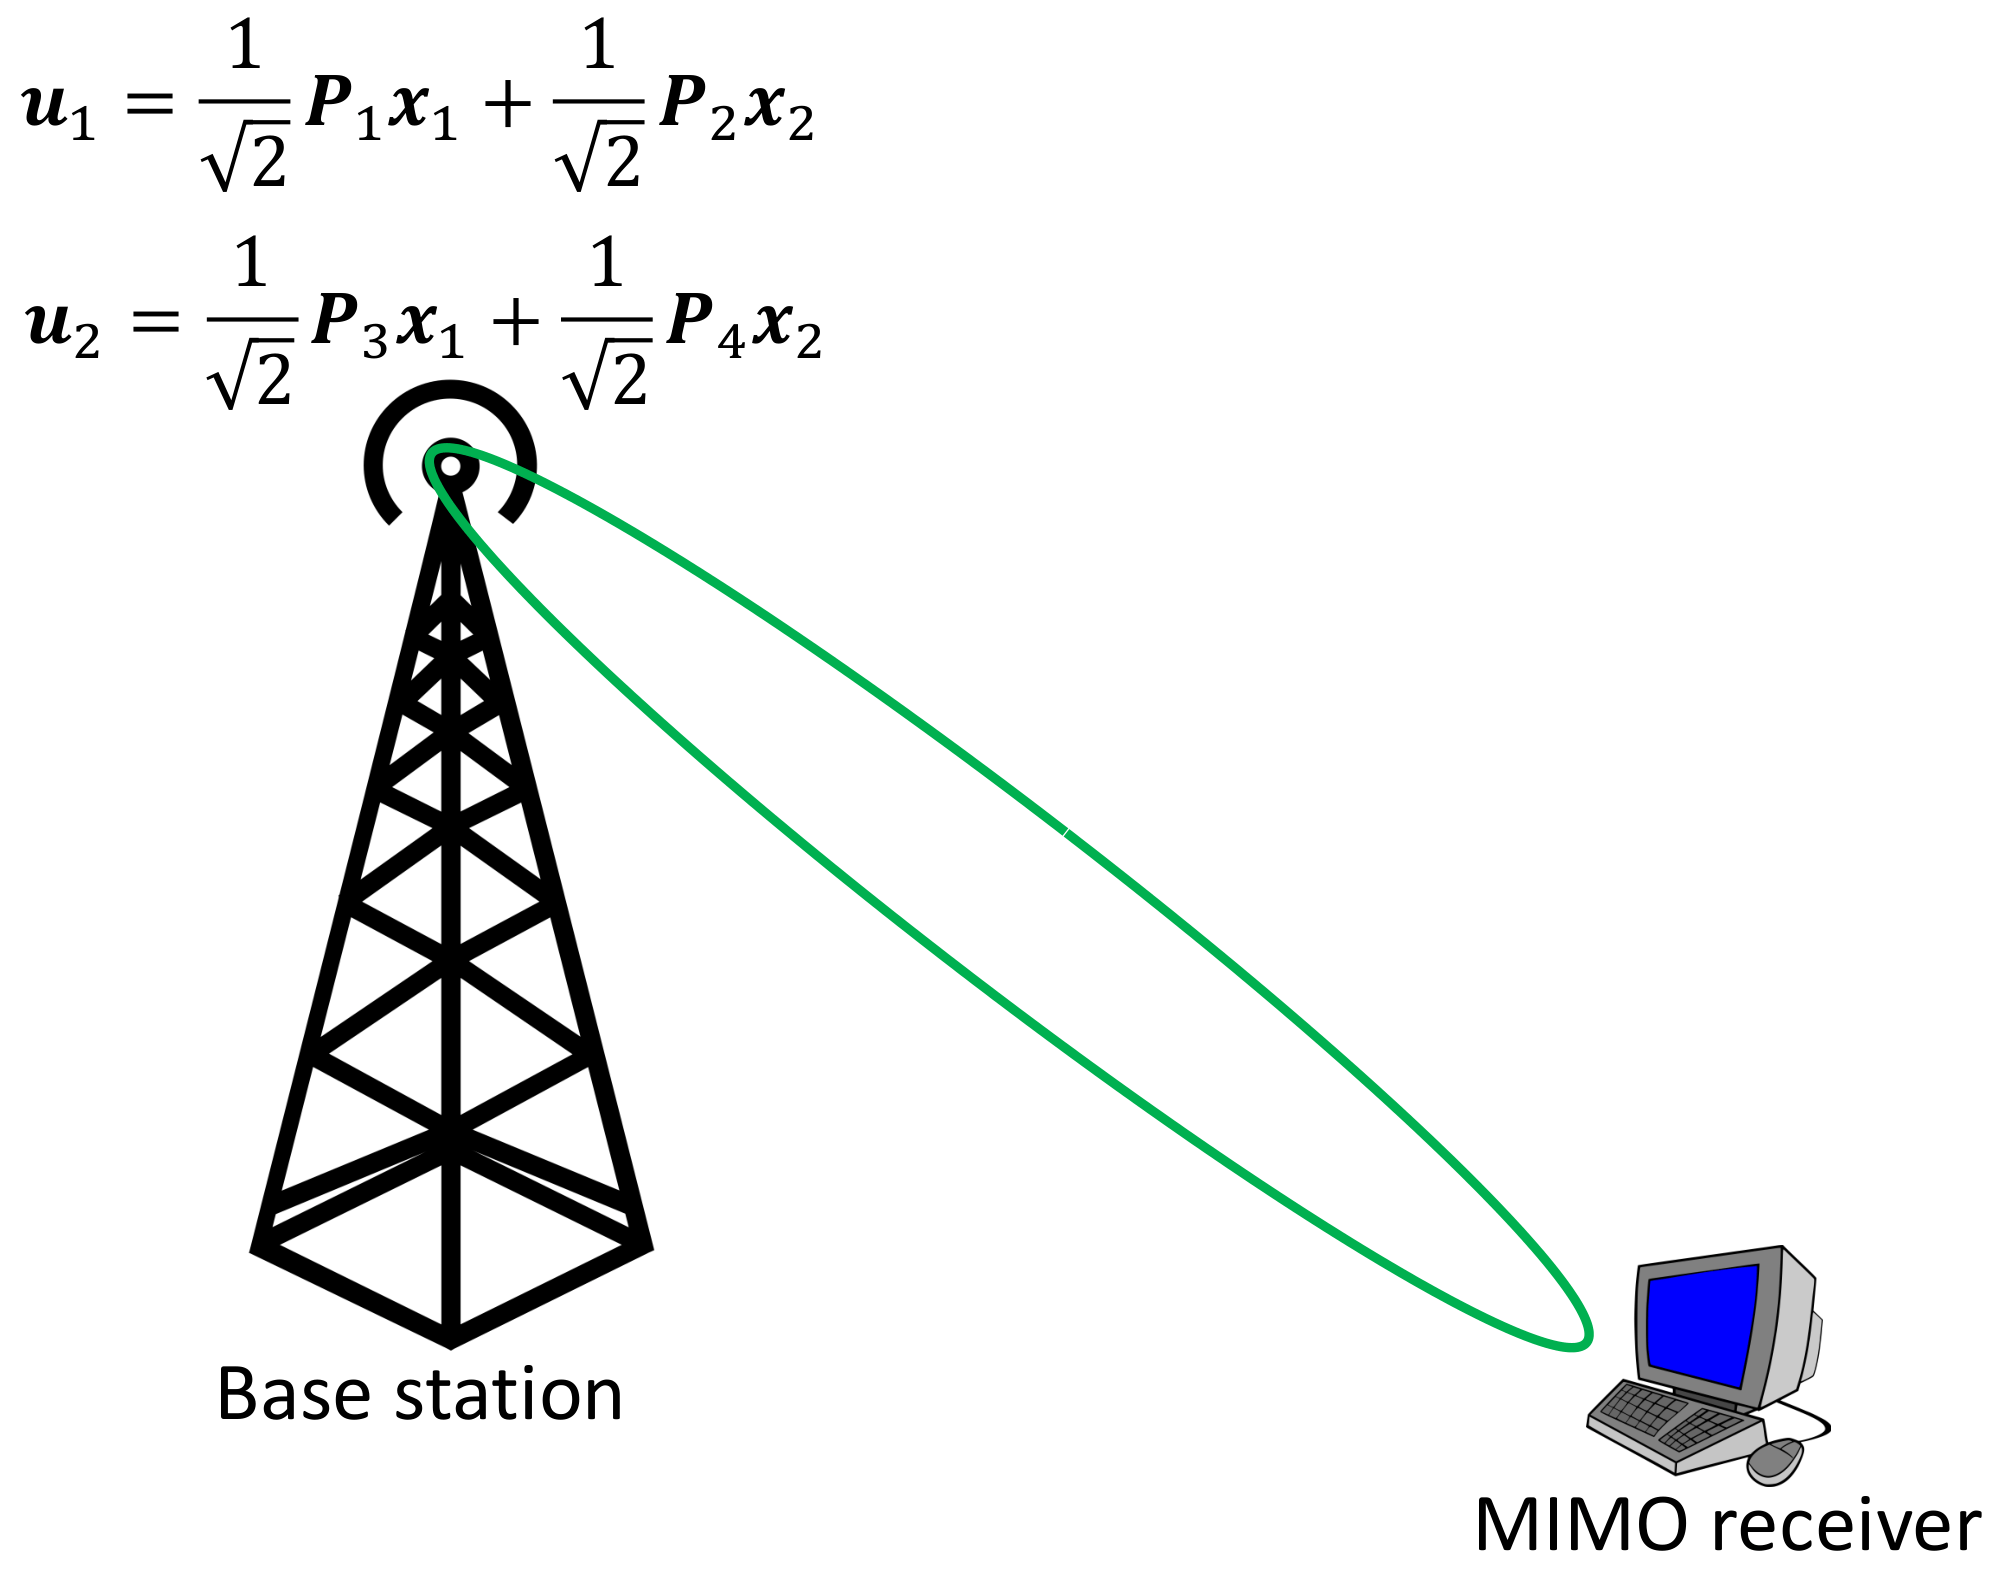 Hybrid MIMO simulation codes